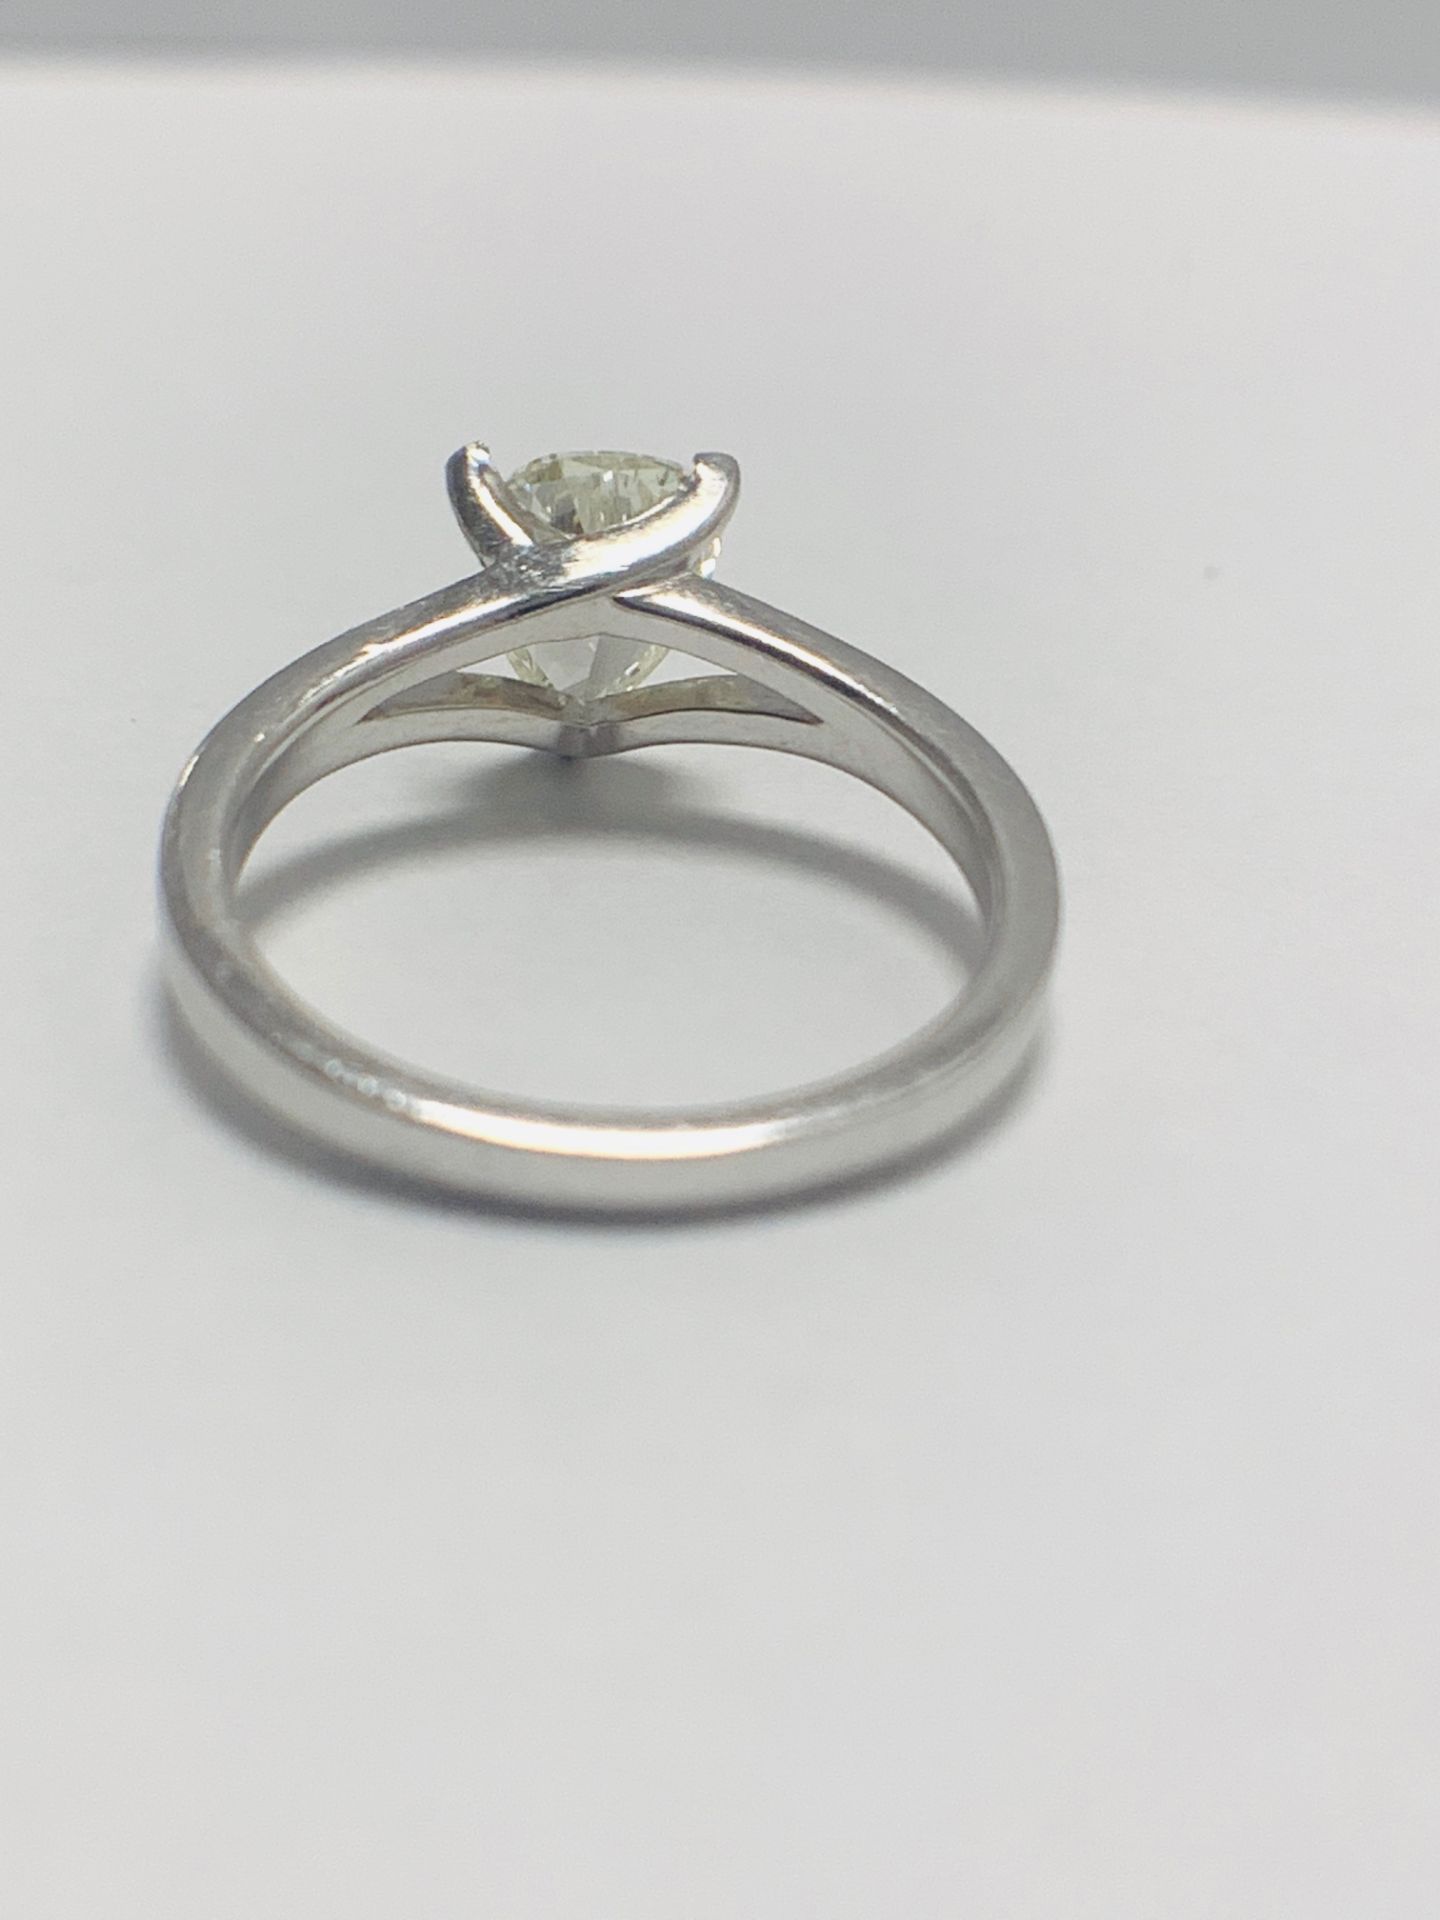 1Ct Pearshape Diamond Platinum Solitaire Ring. - Image 5 of 9